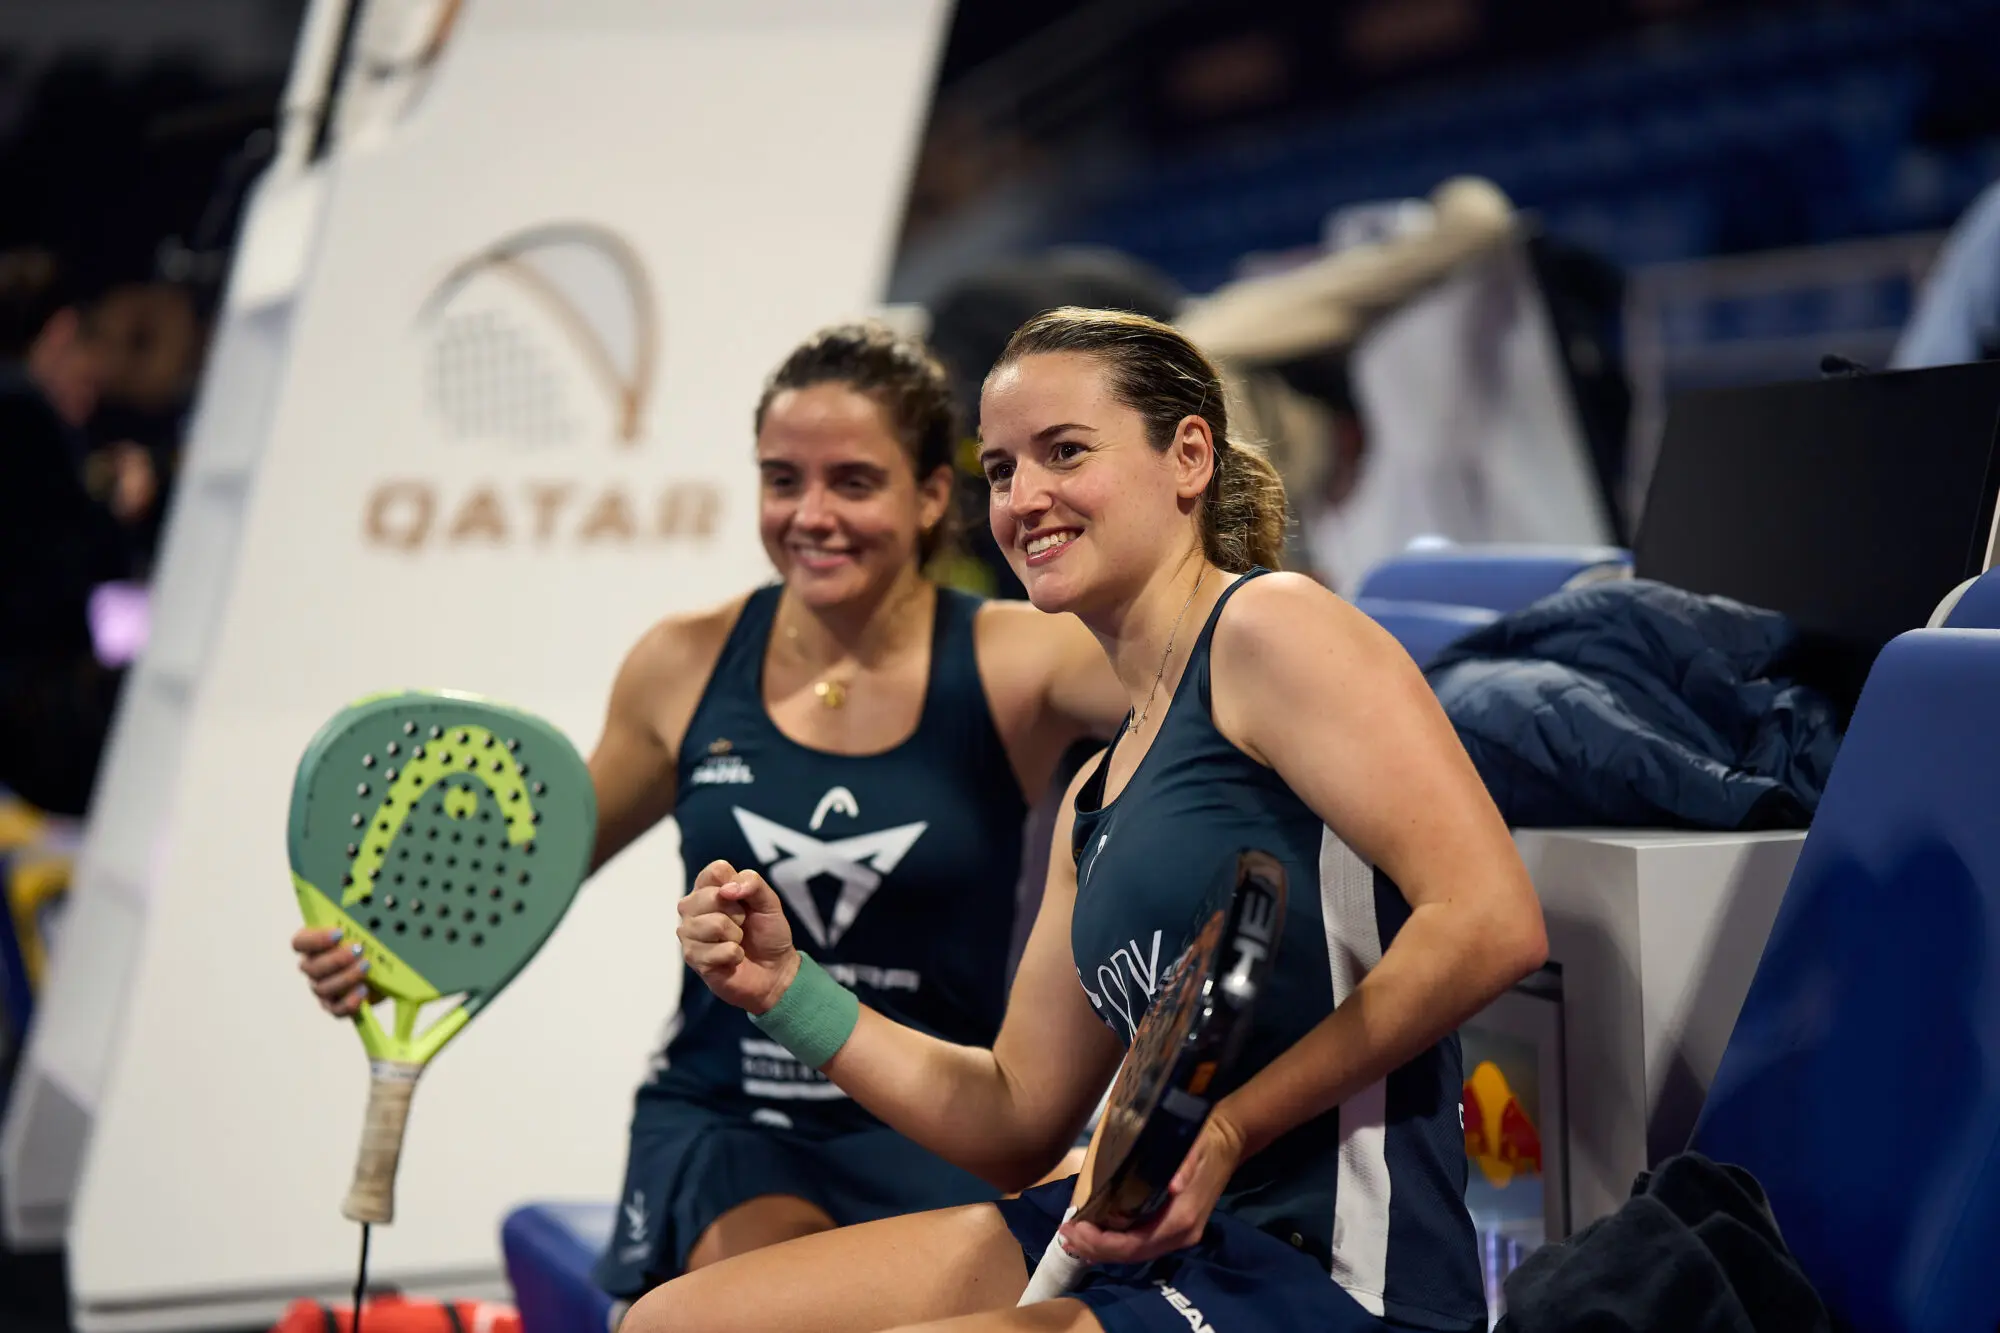 Qatar Major – Paula Josemaria og Ariana Sanchez ryster, men kvalificerer sig til finalen